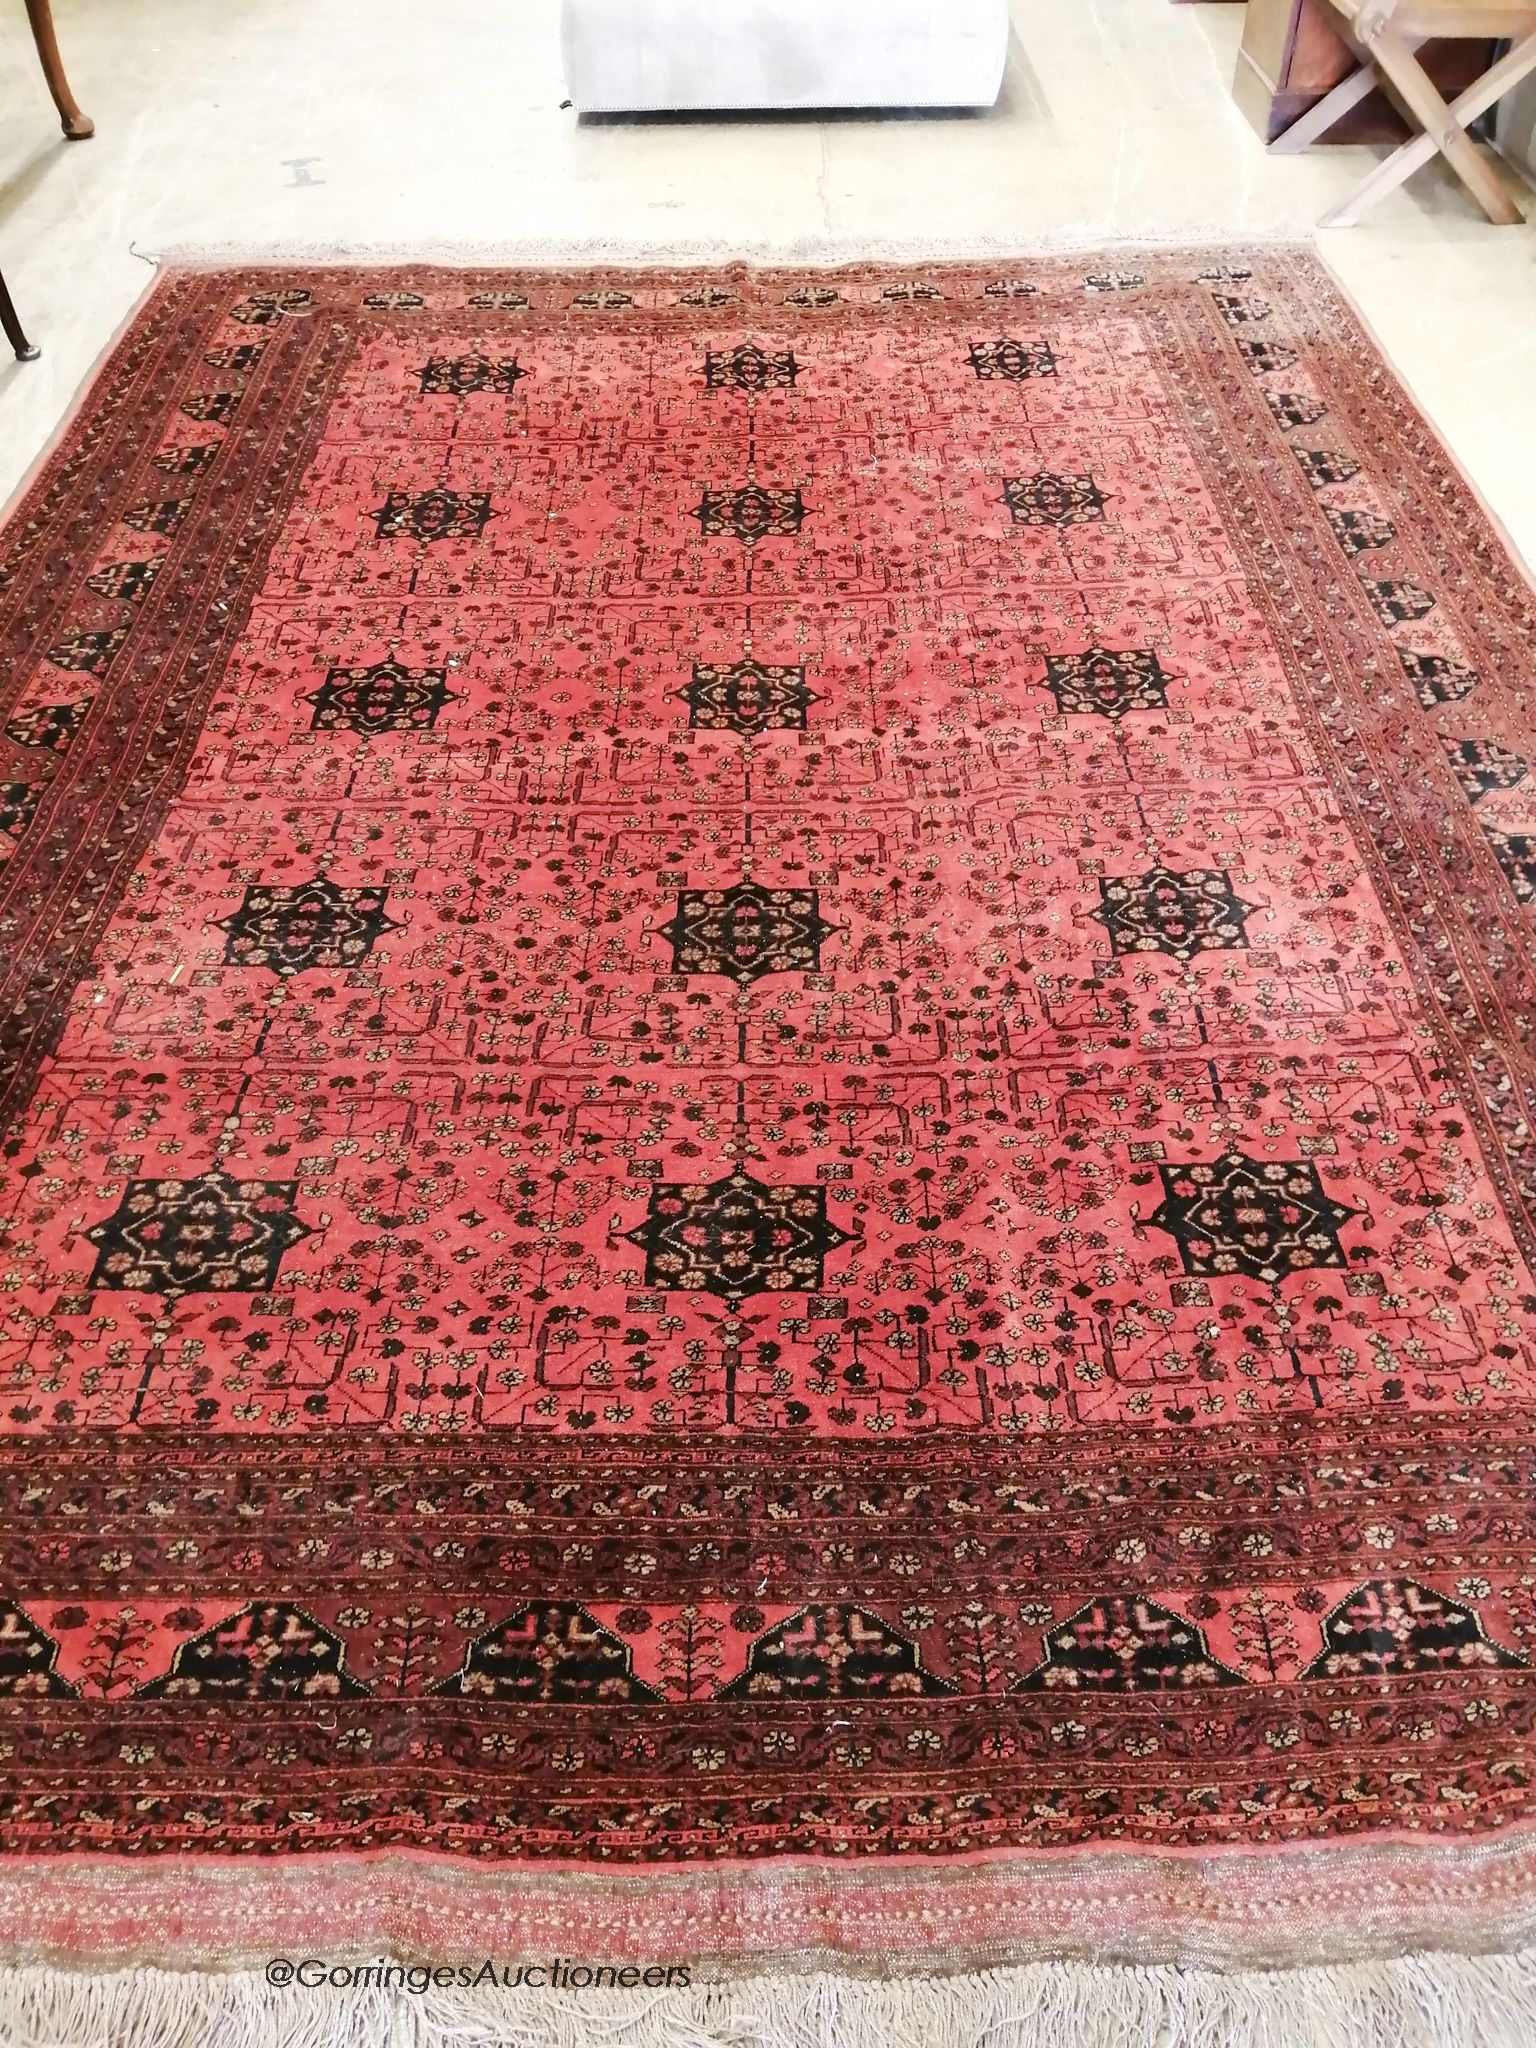 An Afghan red ground carpet, 360 x 260cm